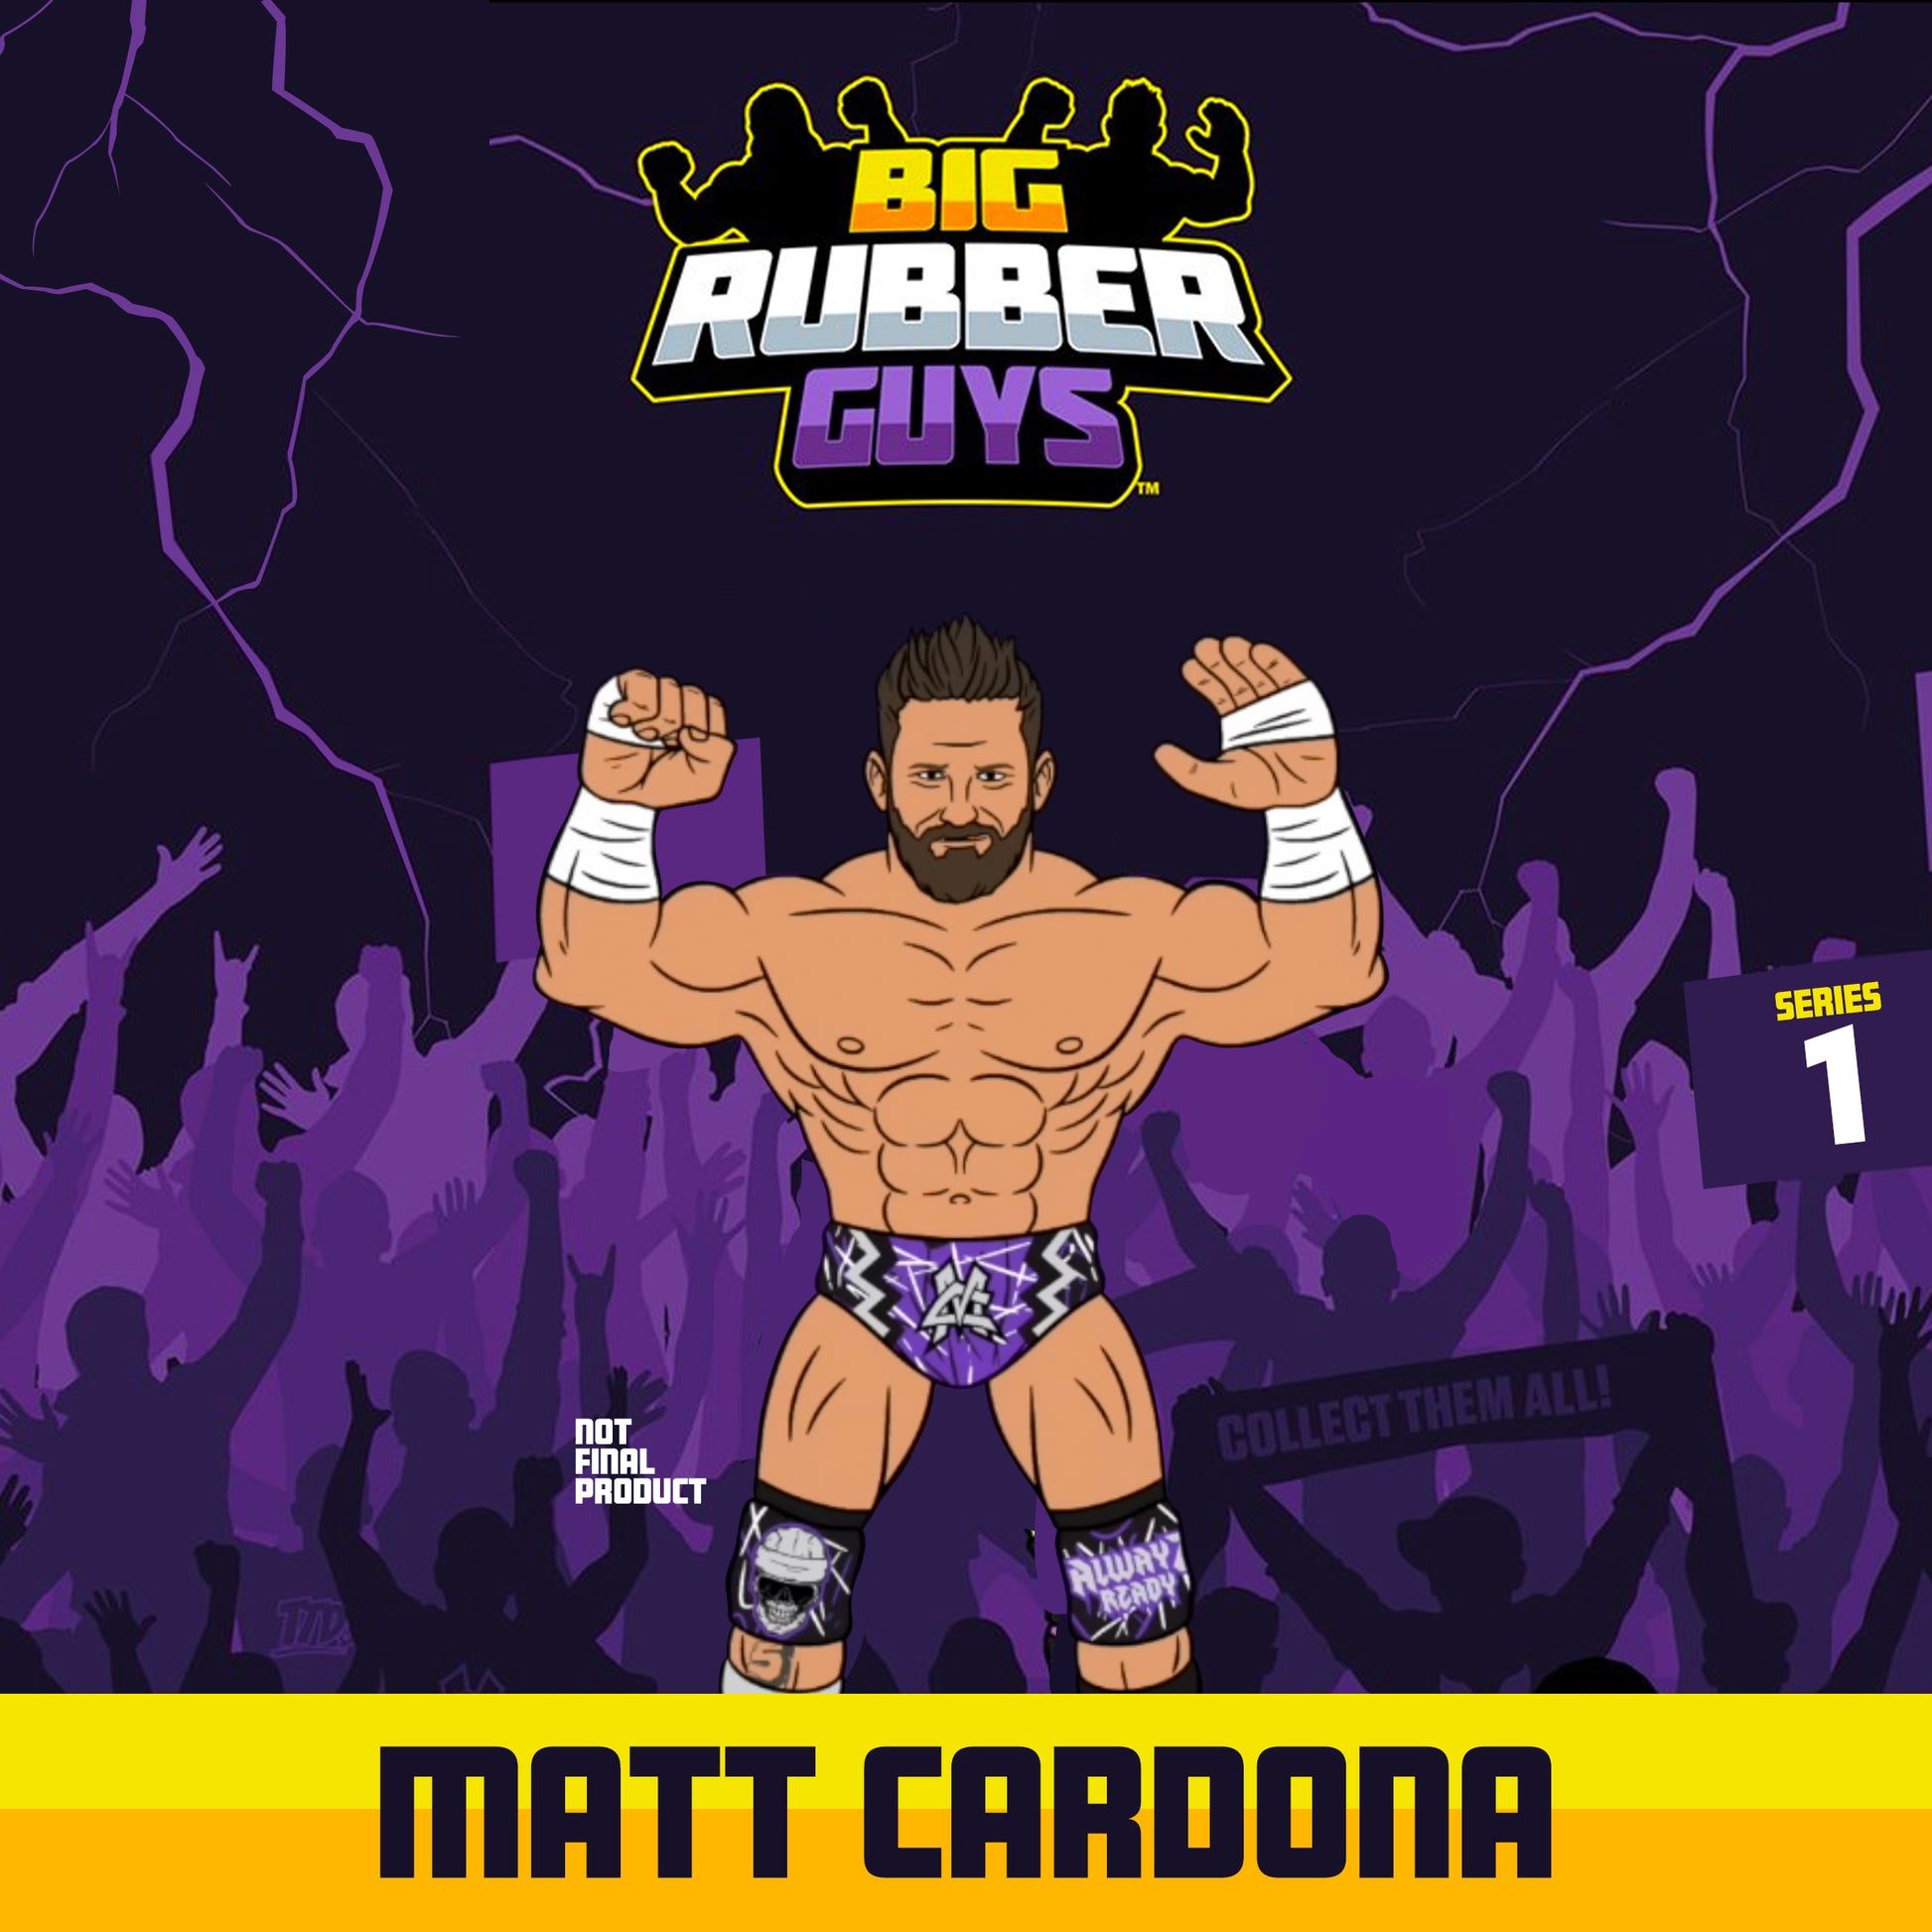 Big Rubber Guys Matt Cardona figure available at www.slamazon.ca